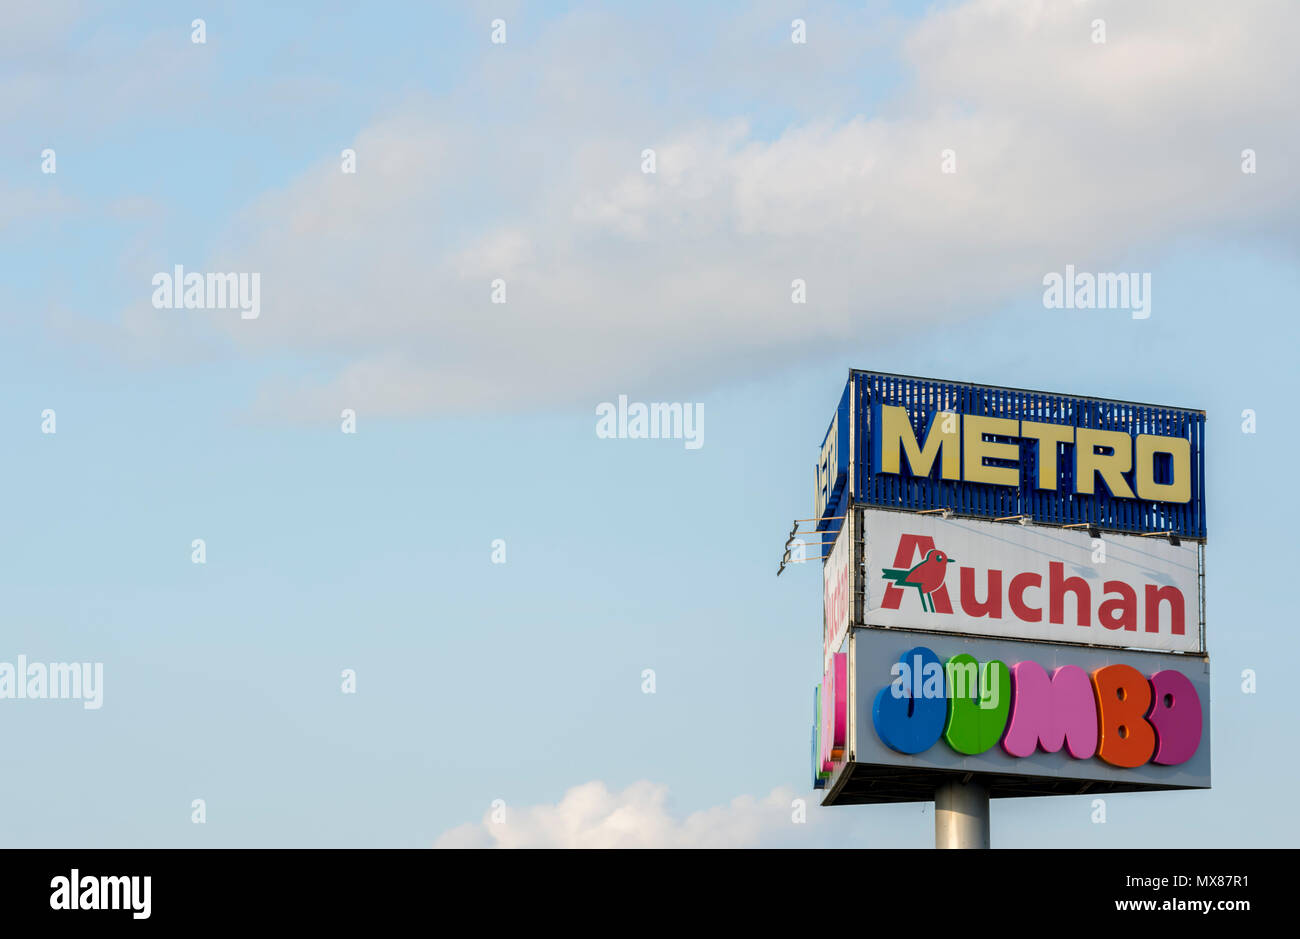 Metro logo, auchand hypermarket logo and Jumbo logo Bucharest 21 May 2018  Stock Photo - Alamy